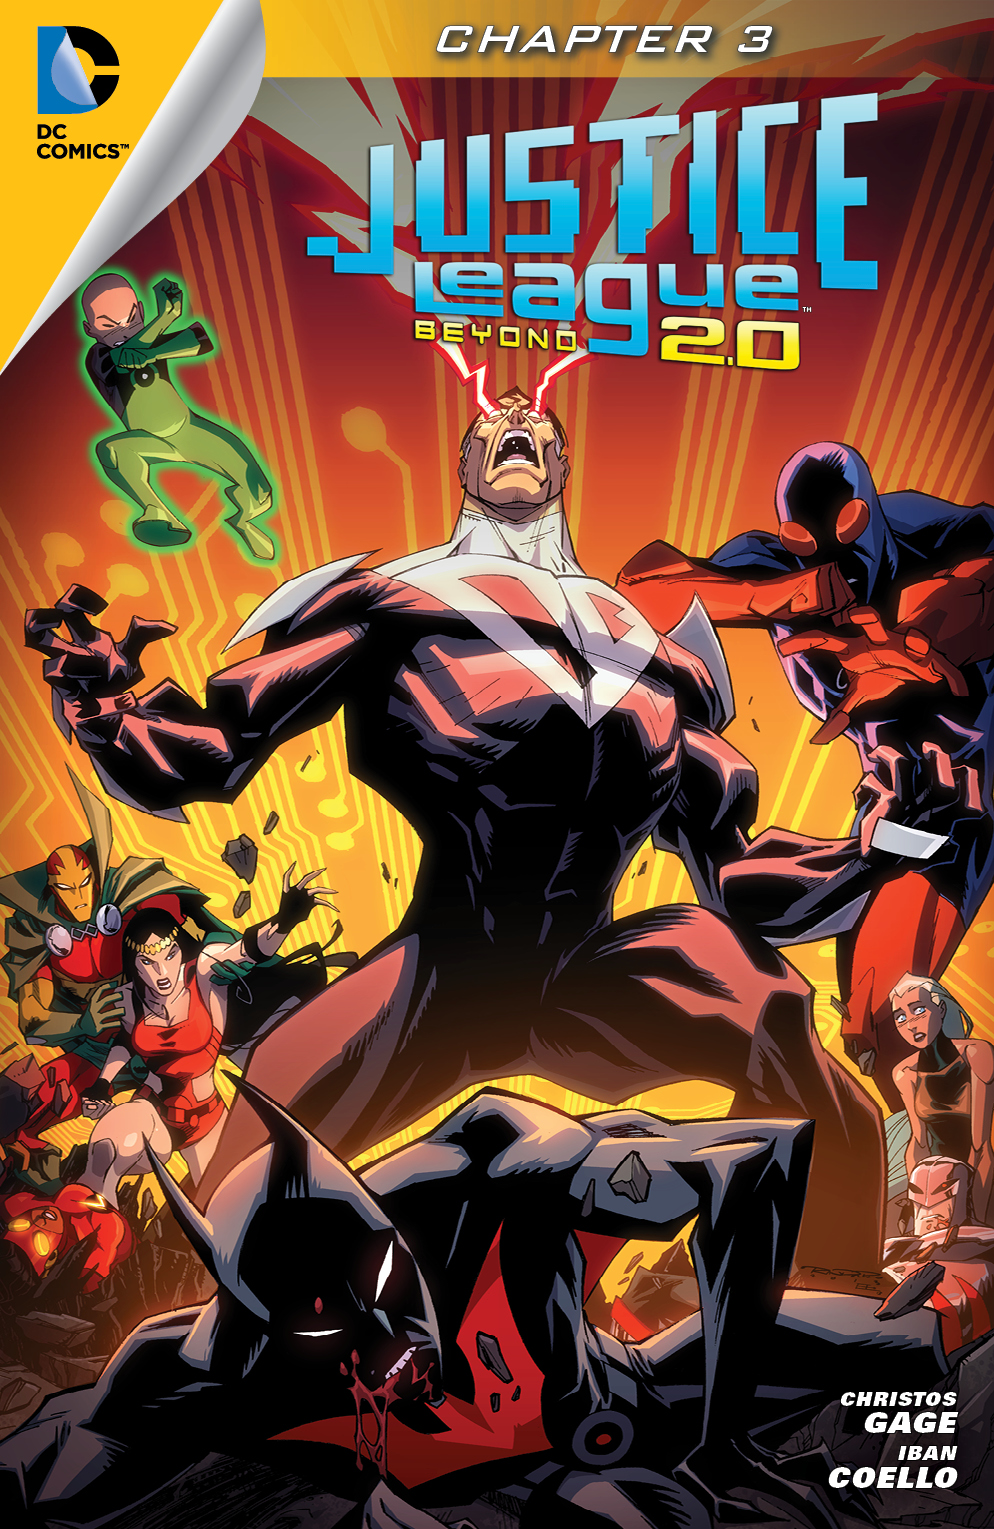 Justice League Beyond 2.0 #3 preview images